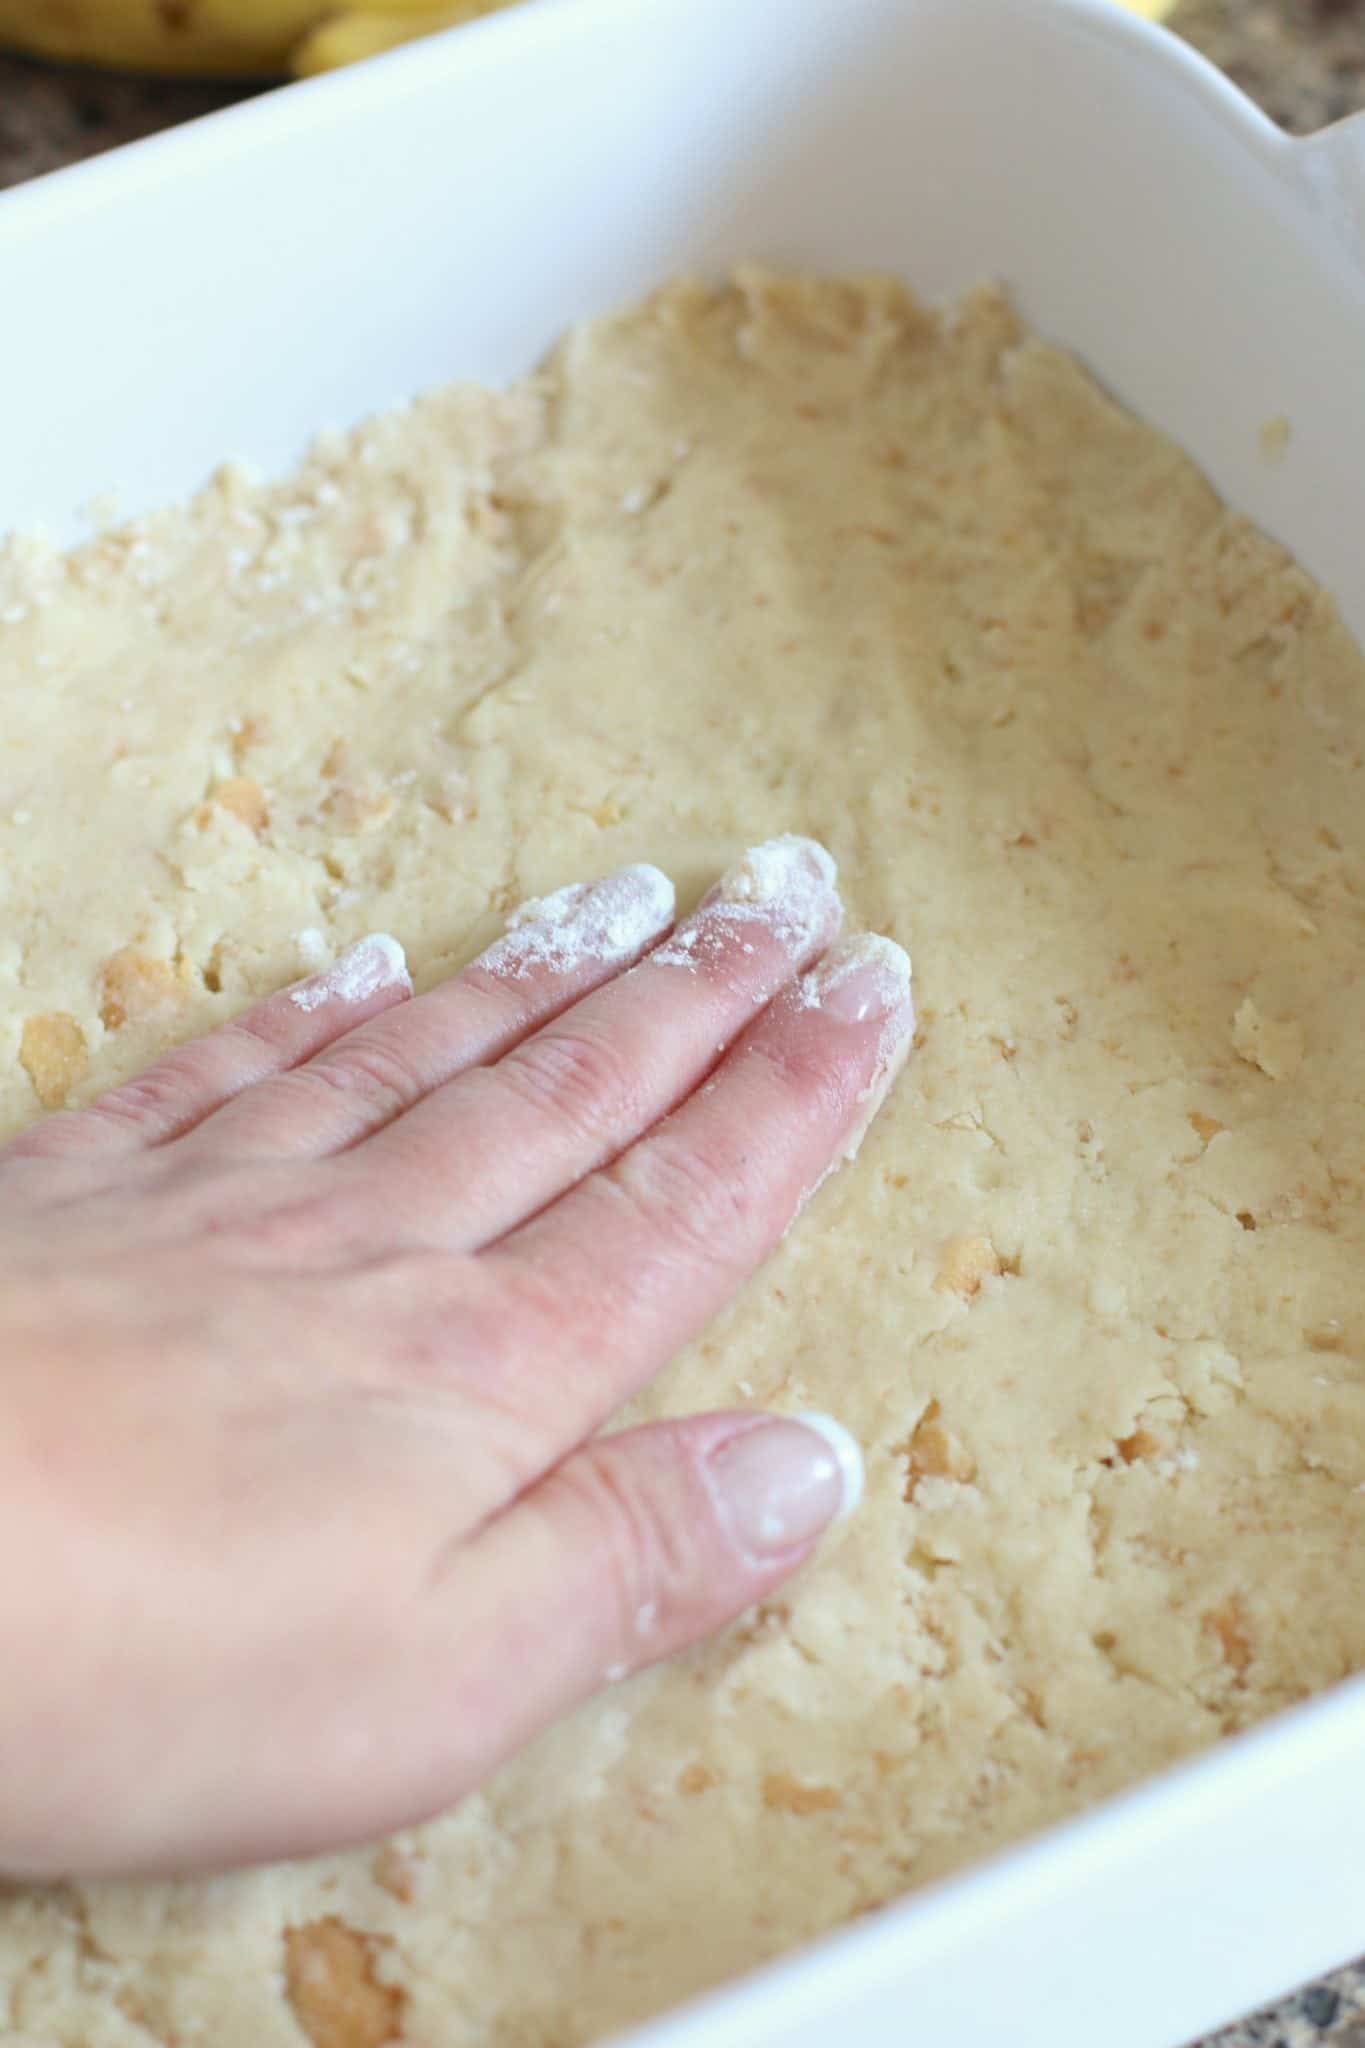 Nilla wafer crust pressed into a square baking dish.